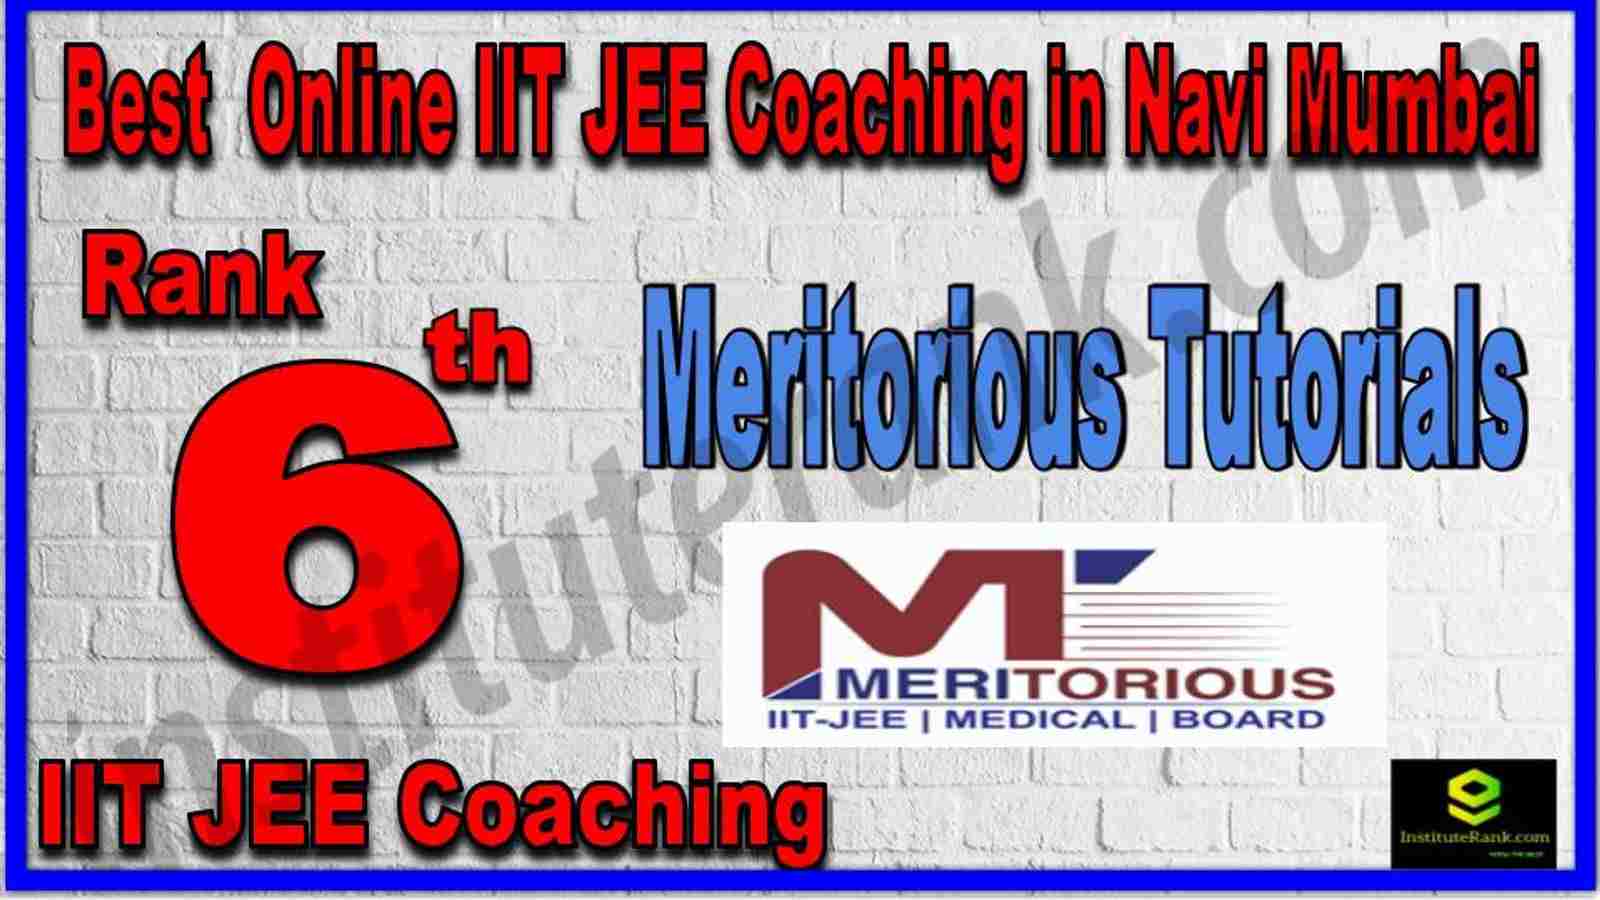 Rank 6th Best Online IIT JEE Coaching in Navi Mumbai